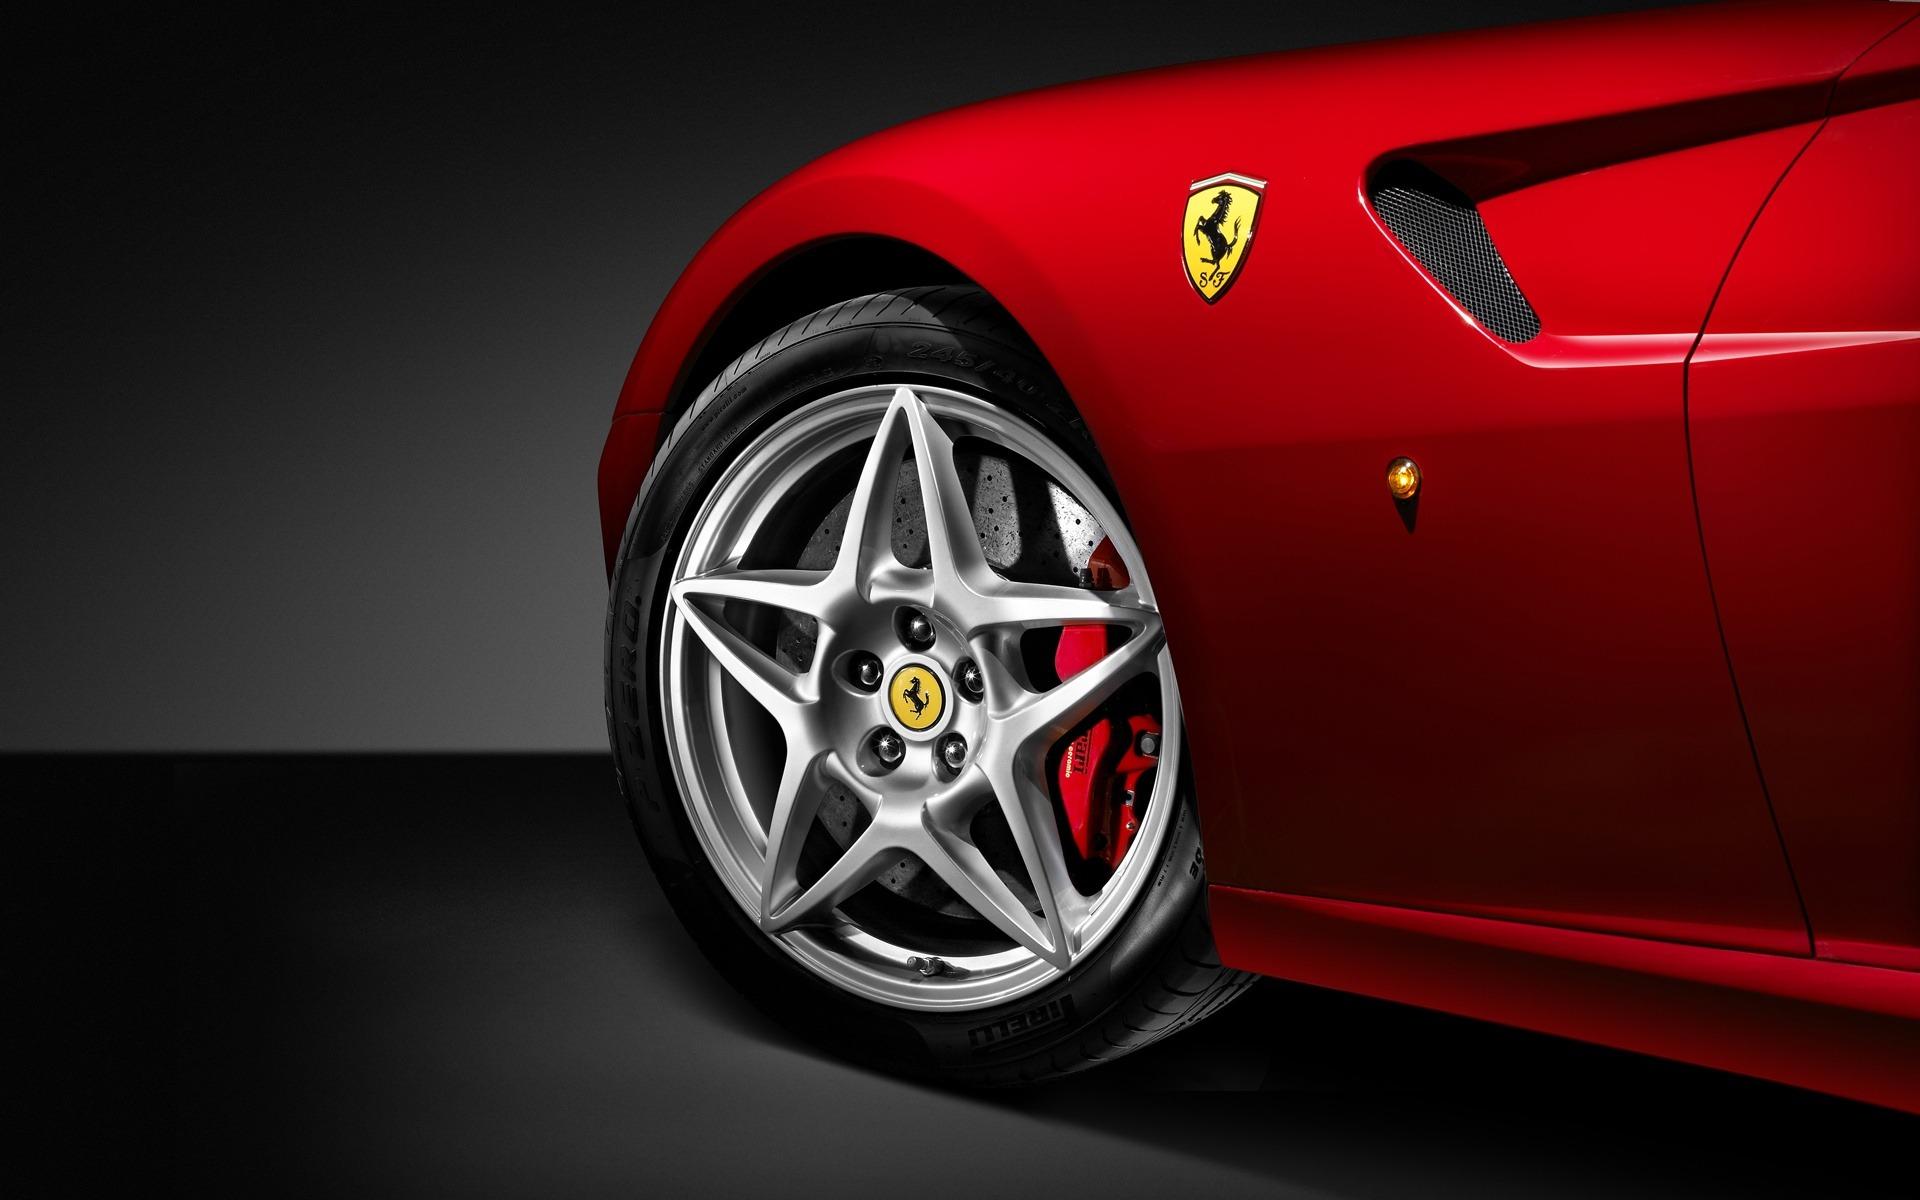 Ferrari Fiorano rims Wallpaper Ferrari Cars Wallpaper in jpg format